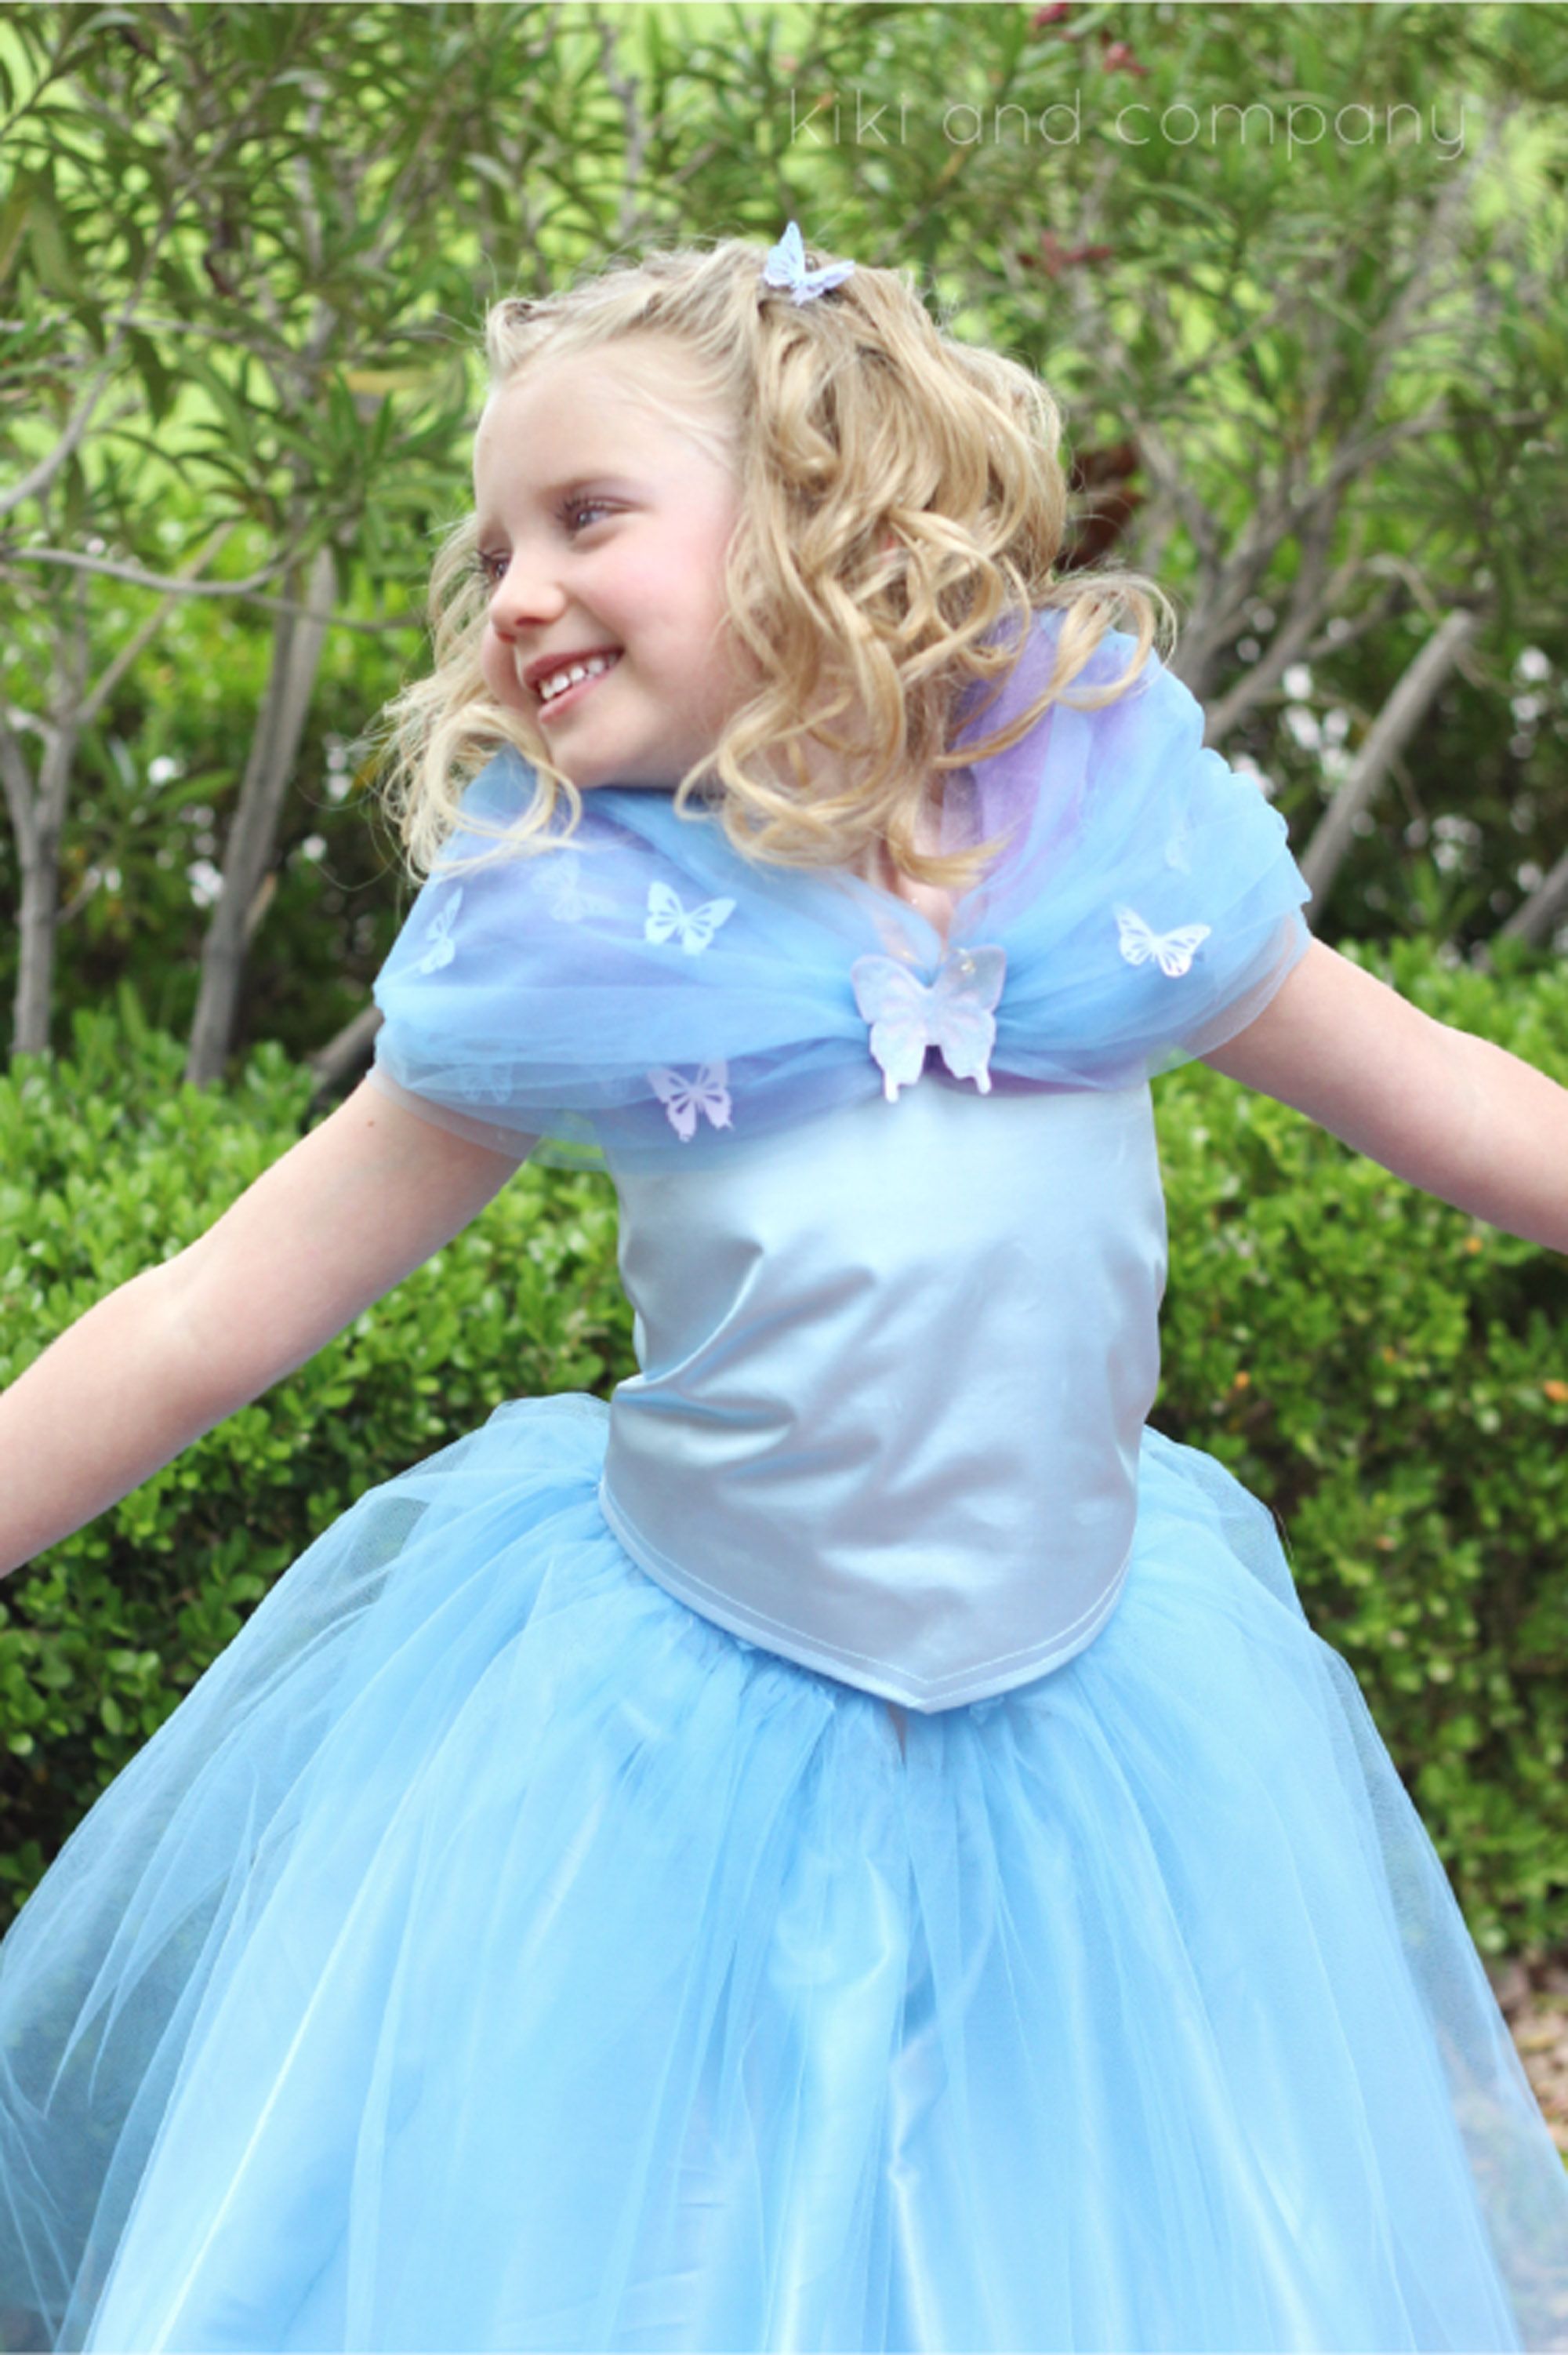 Buy > child's cinderella costume > in stock